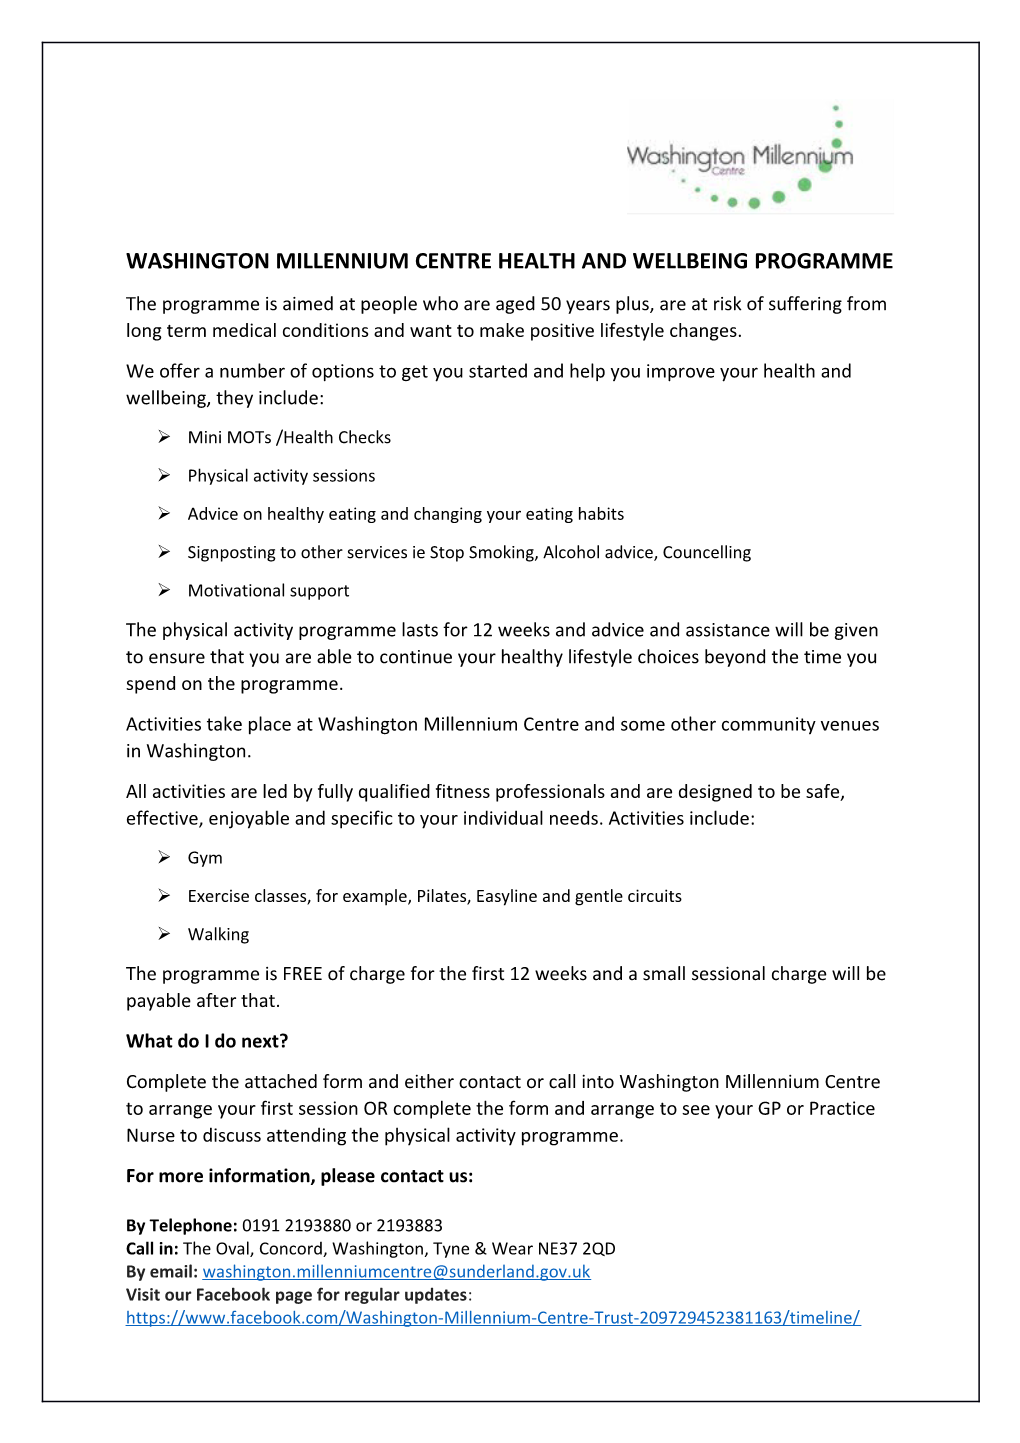 Washington Millennium Centre Health and Wellbeing Programme